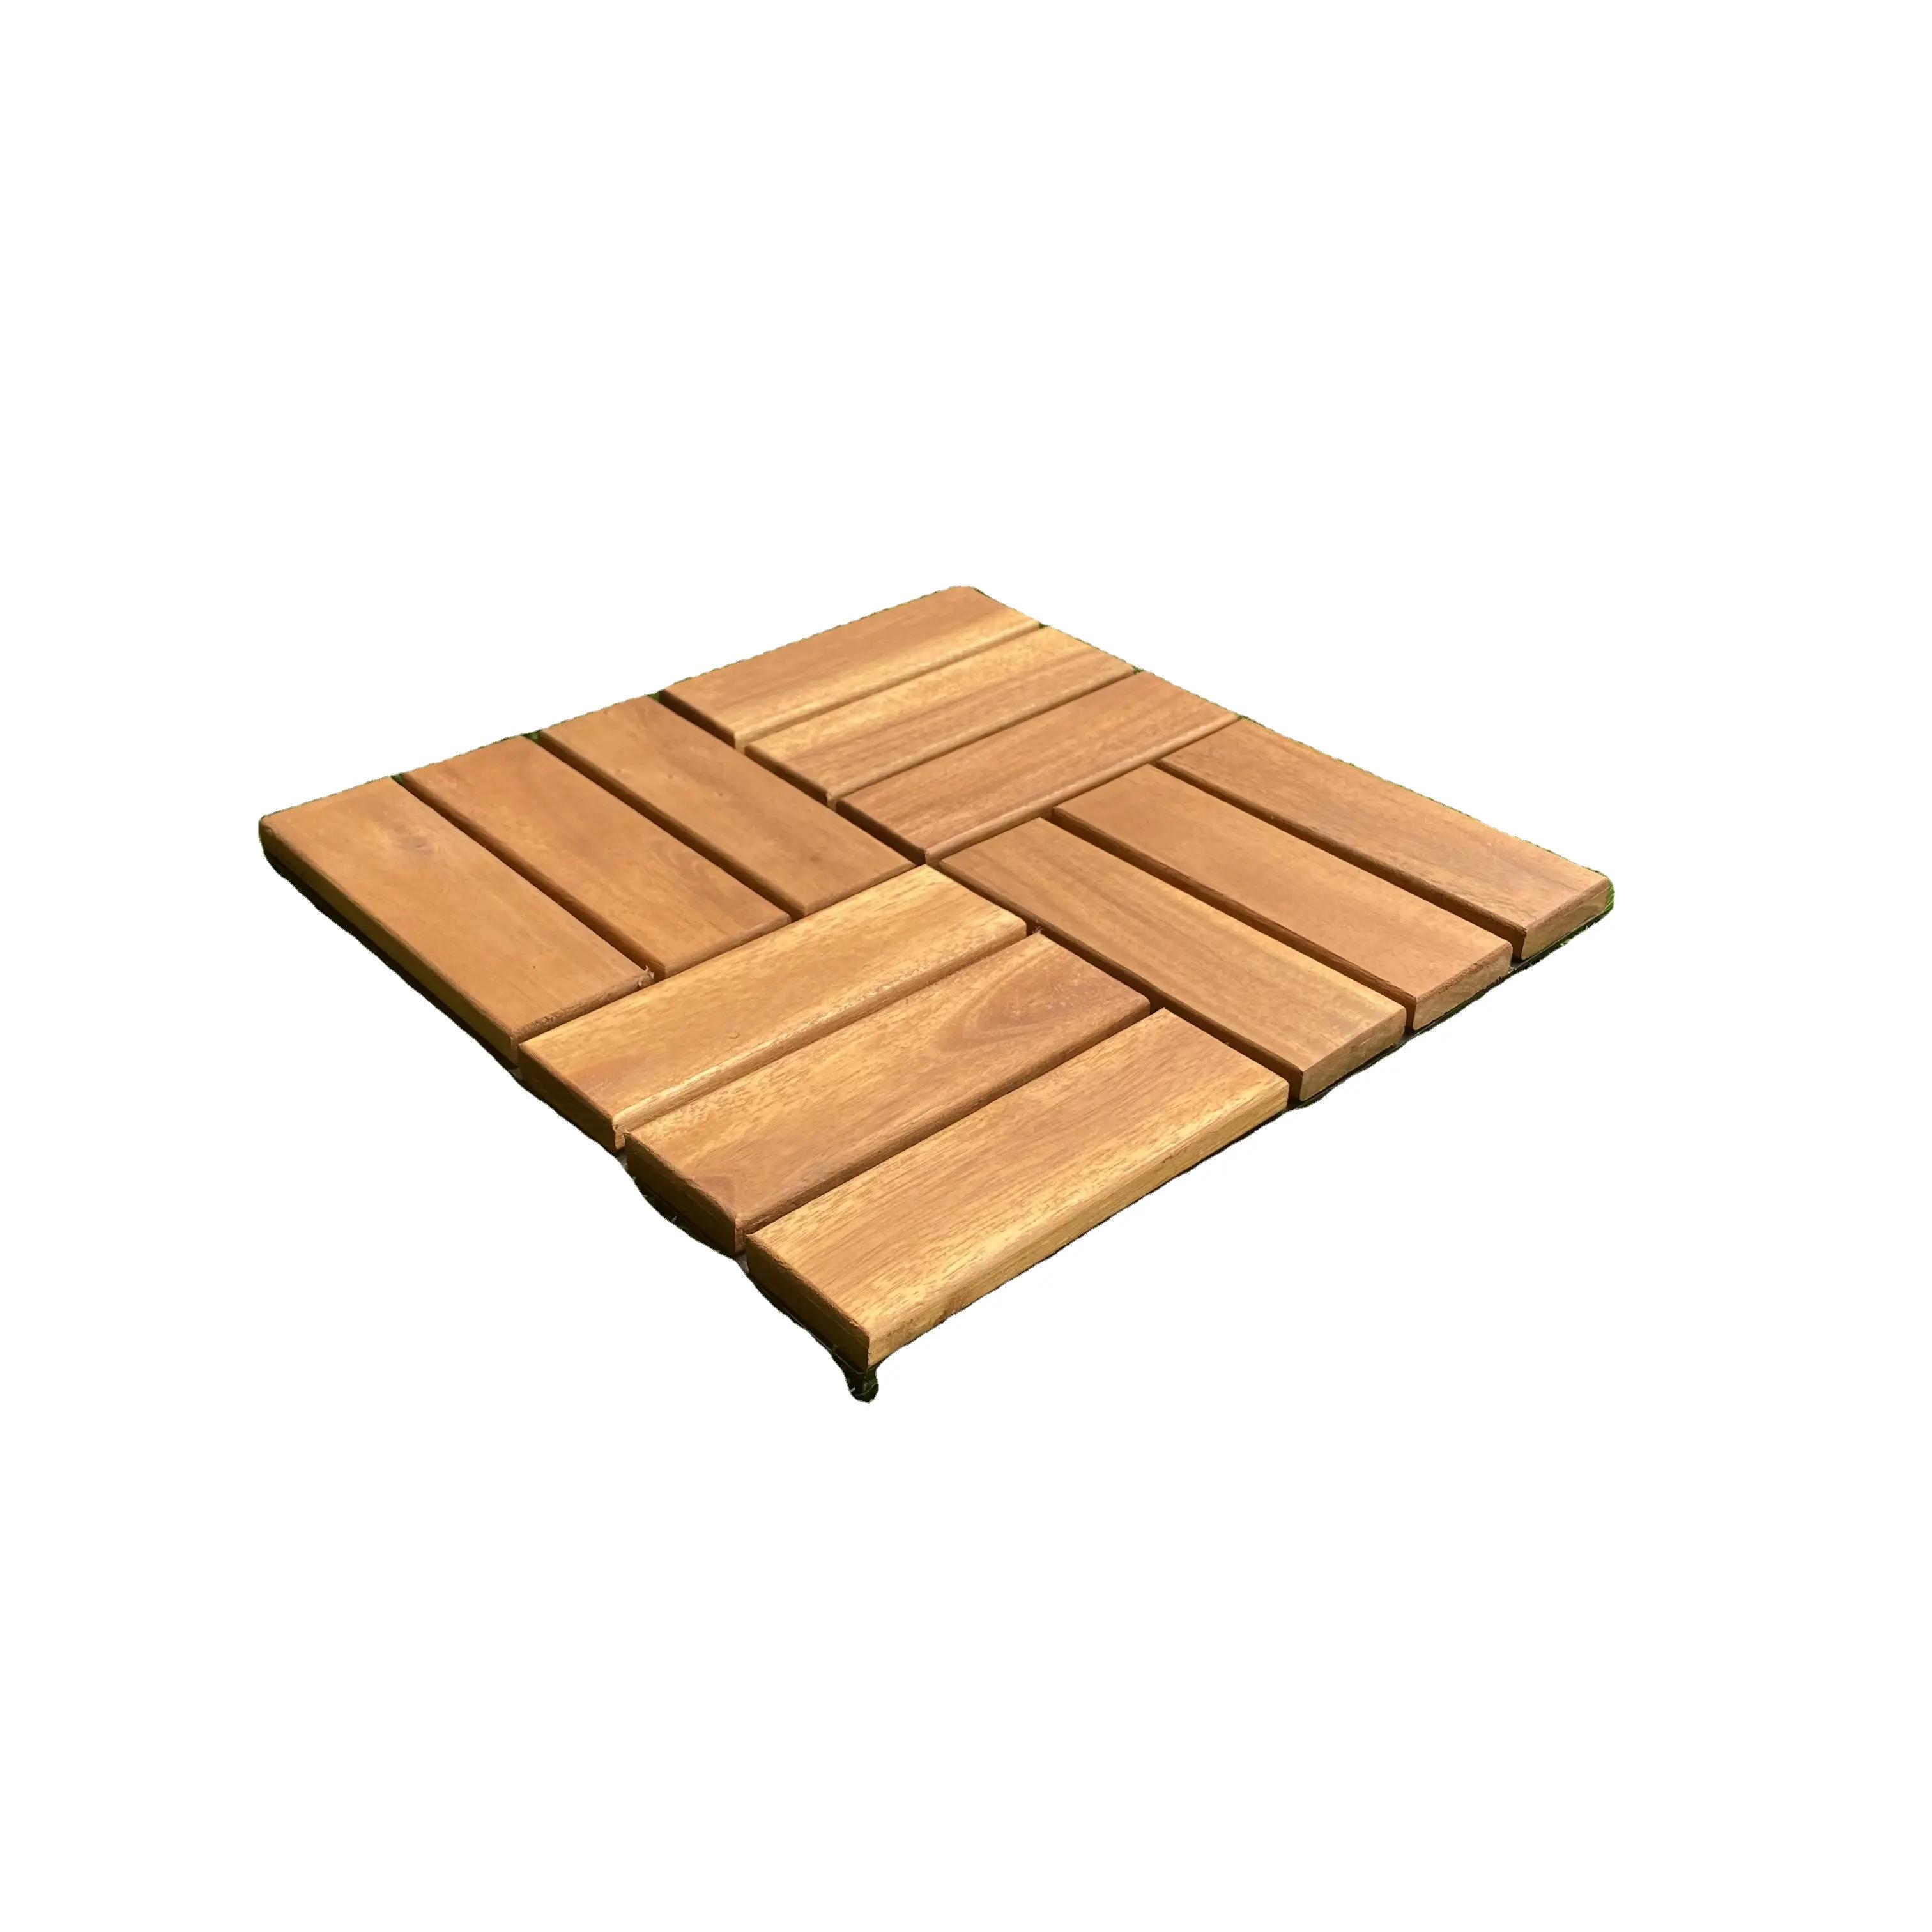 Azulejos de cubierta de madera de Acacia, estándar europeo, con base de plástico, 300x300mm, precio competitivo, barato